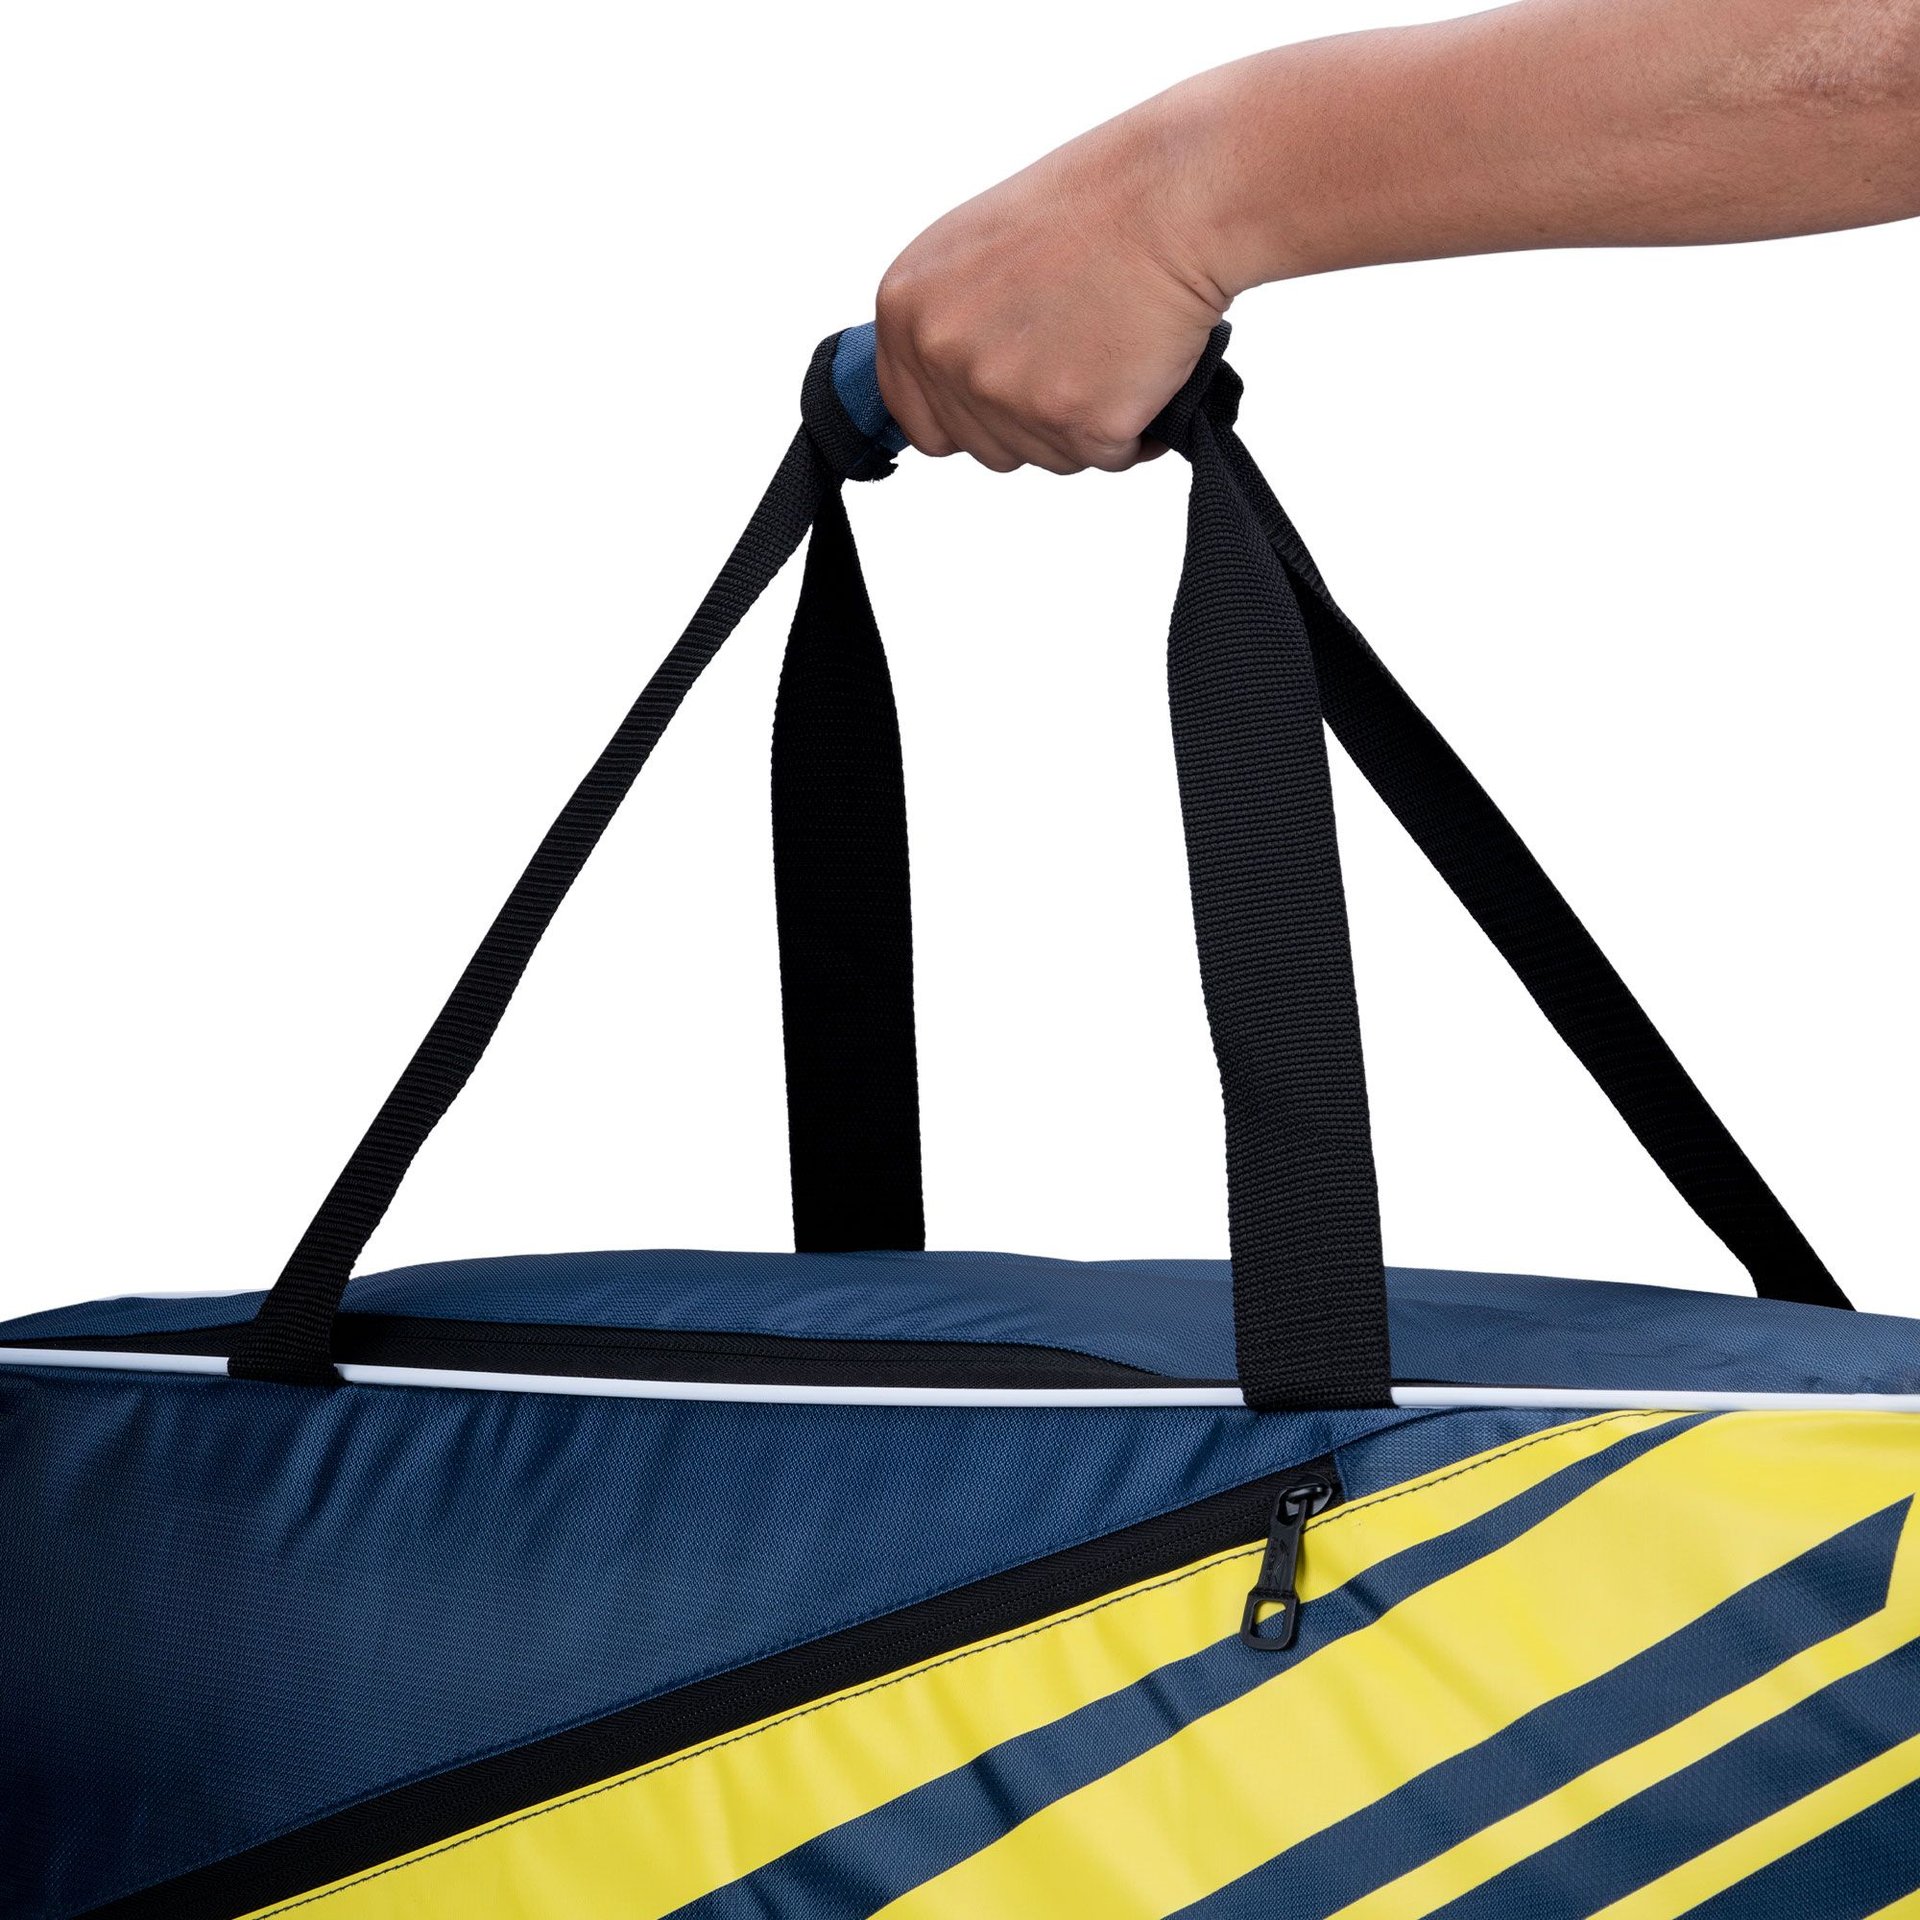 Crato Badminton Kit Bag - Carry Handle